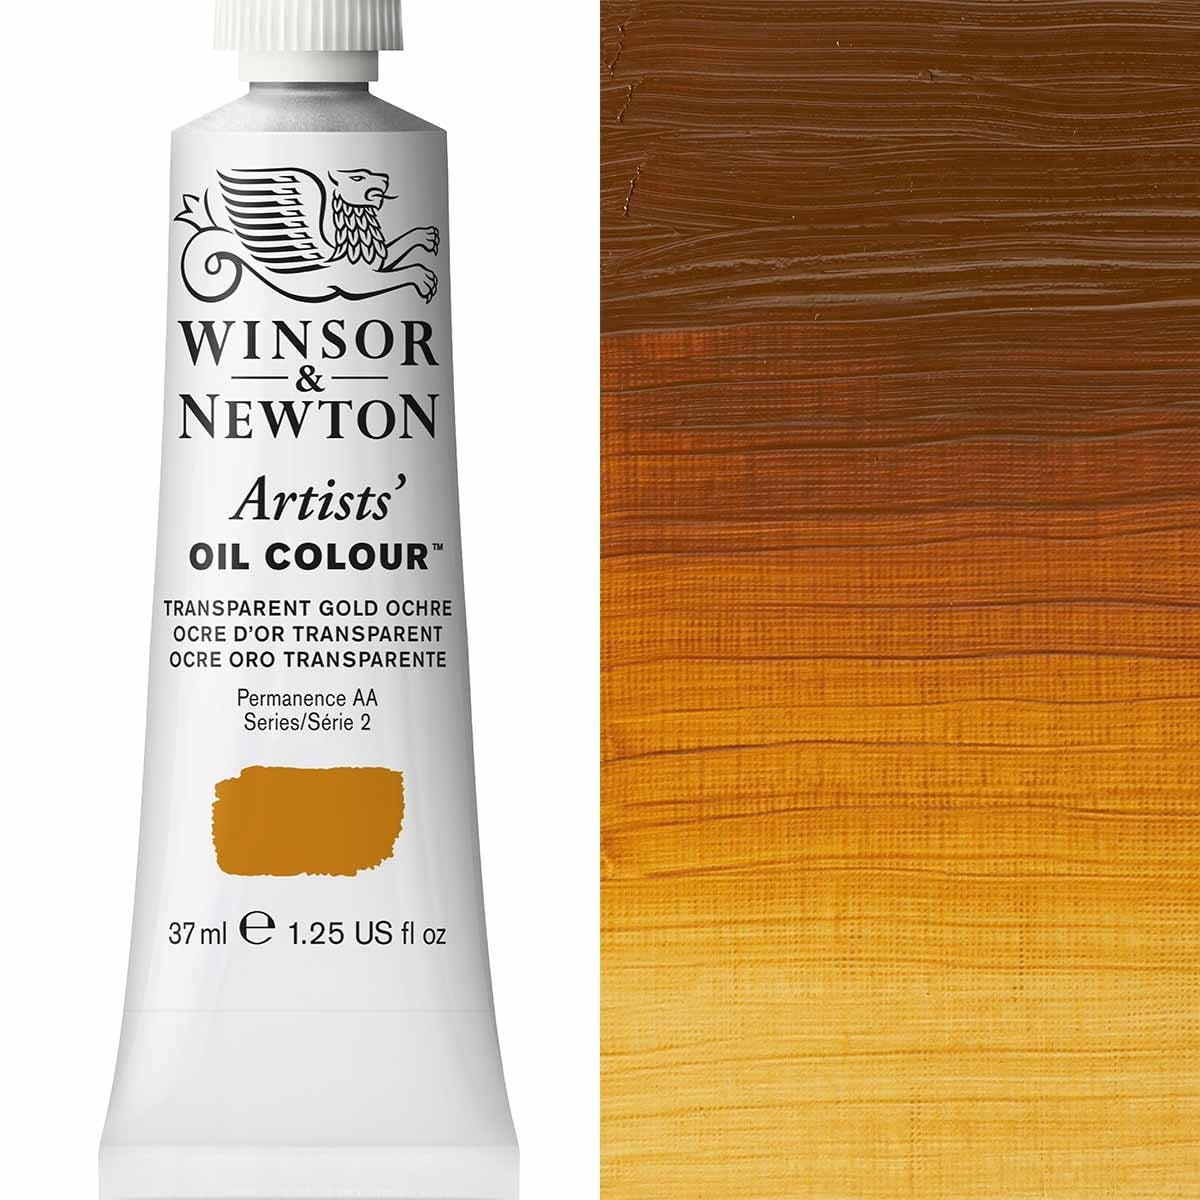 Winsor and Newton - Artists' Oil Colour - 37ml - Transparent Gold Ochre